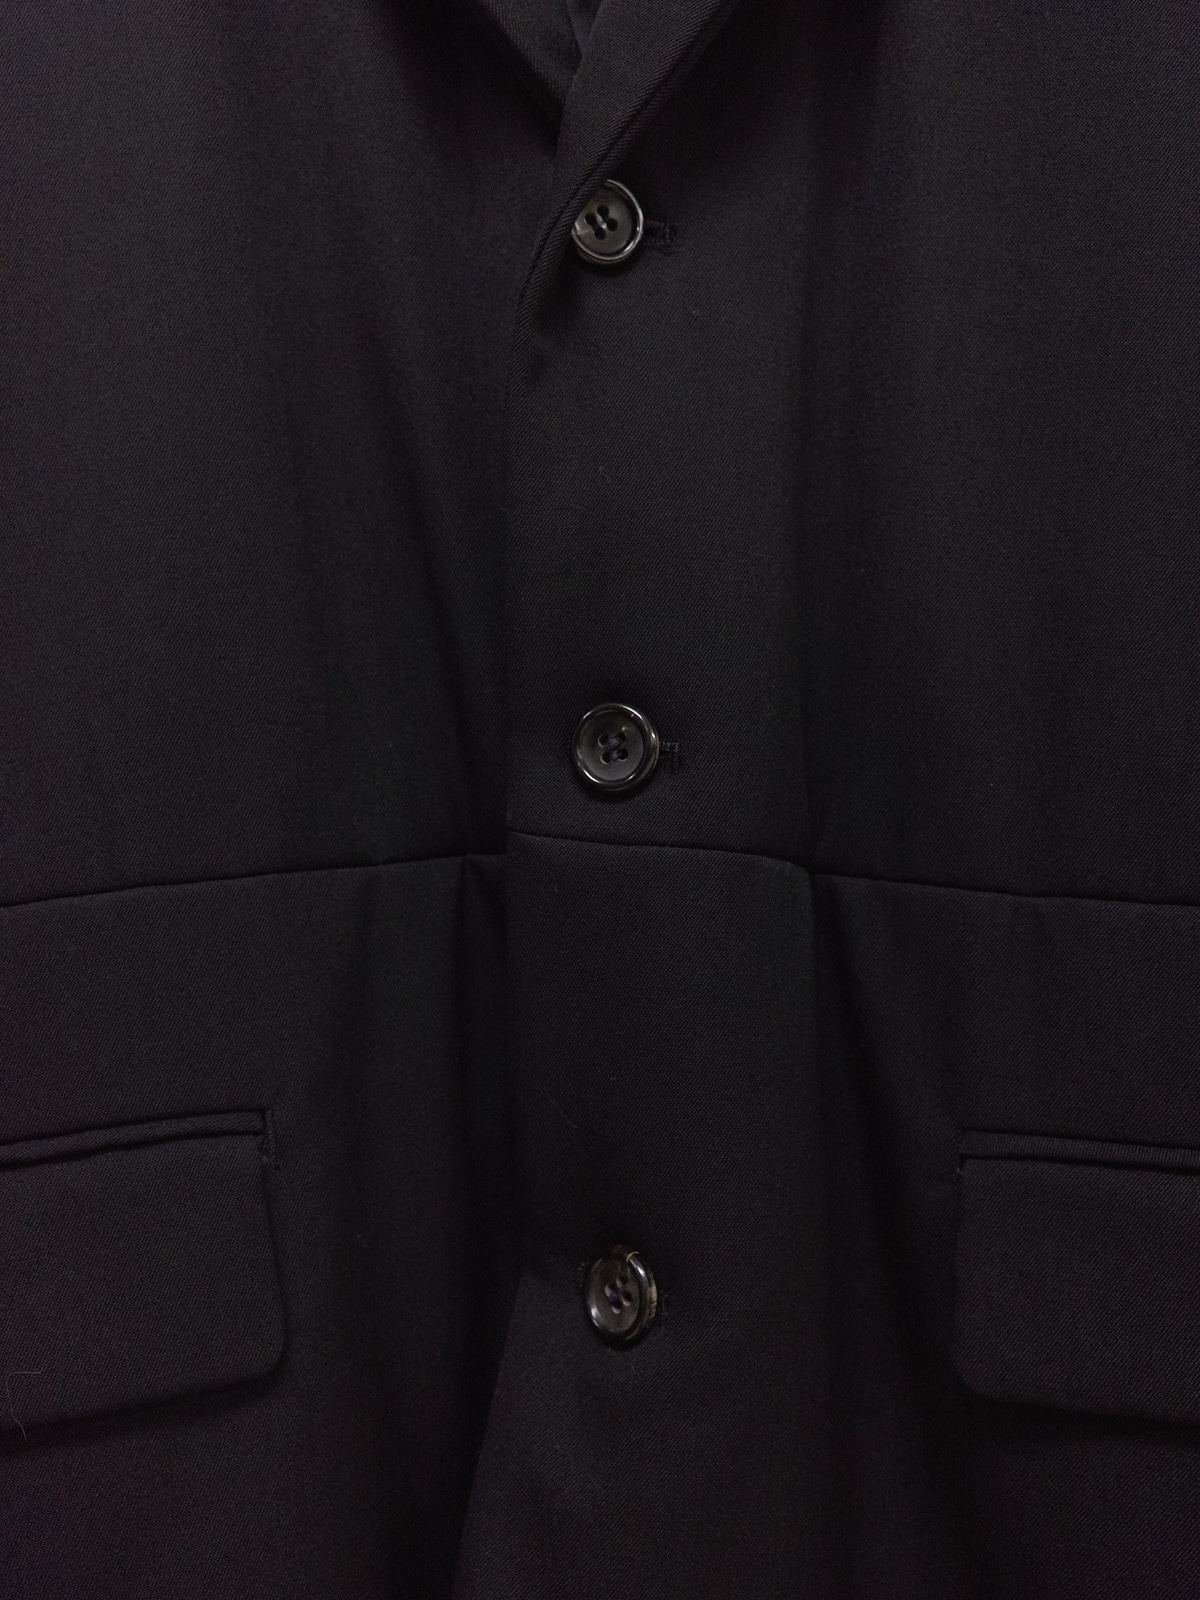 Comme des Garcons Homme 1991 black padded wool 3 button drawstring blazer - sz M